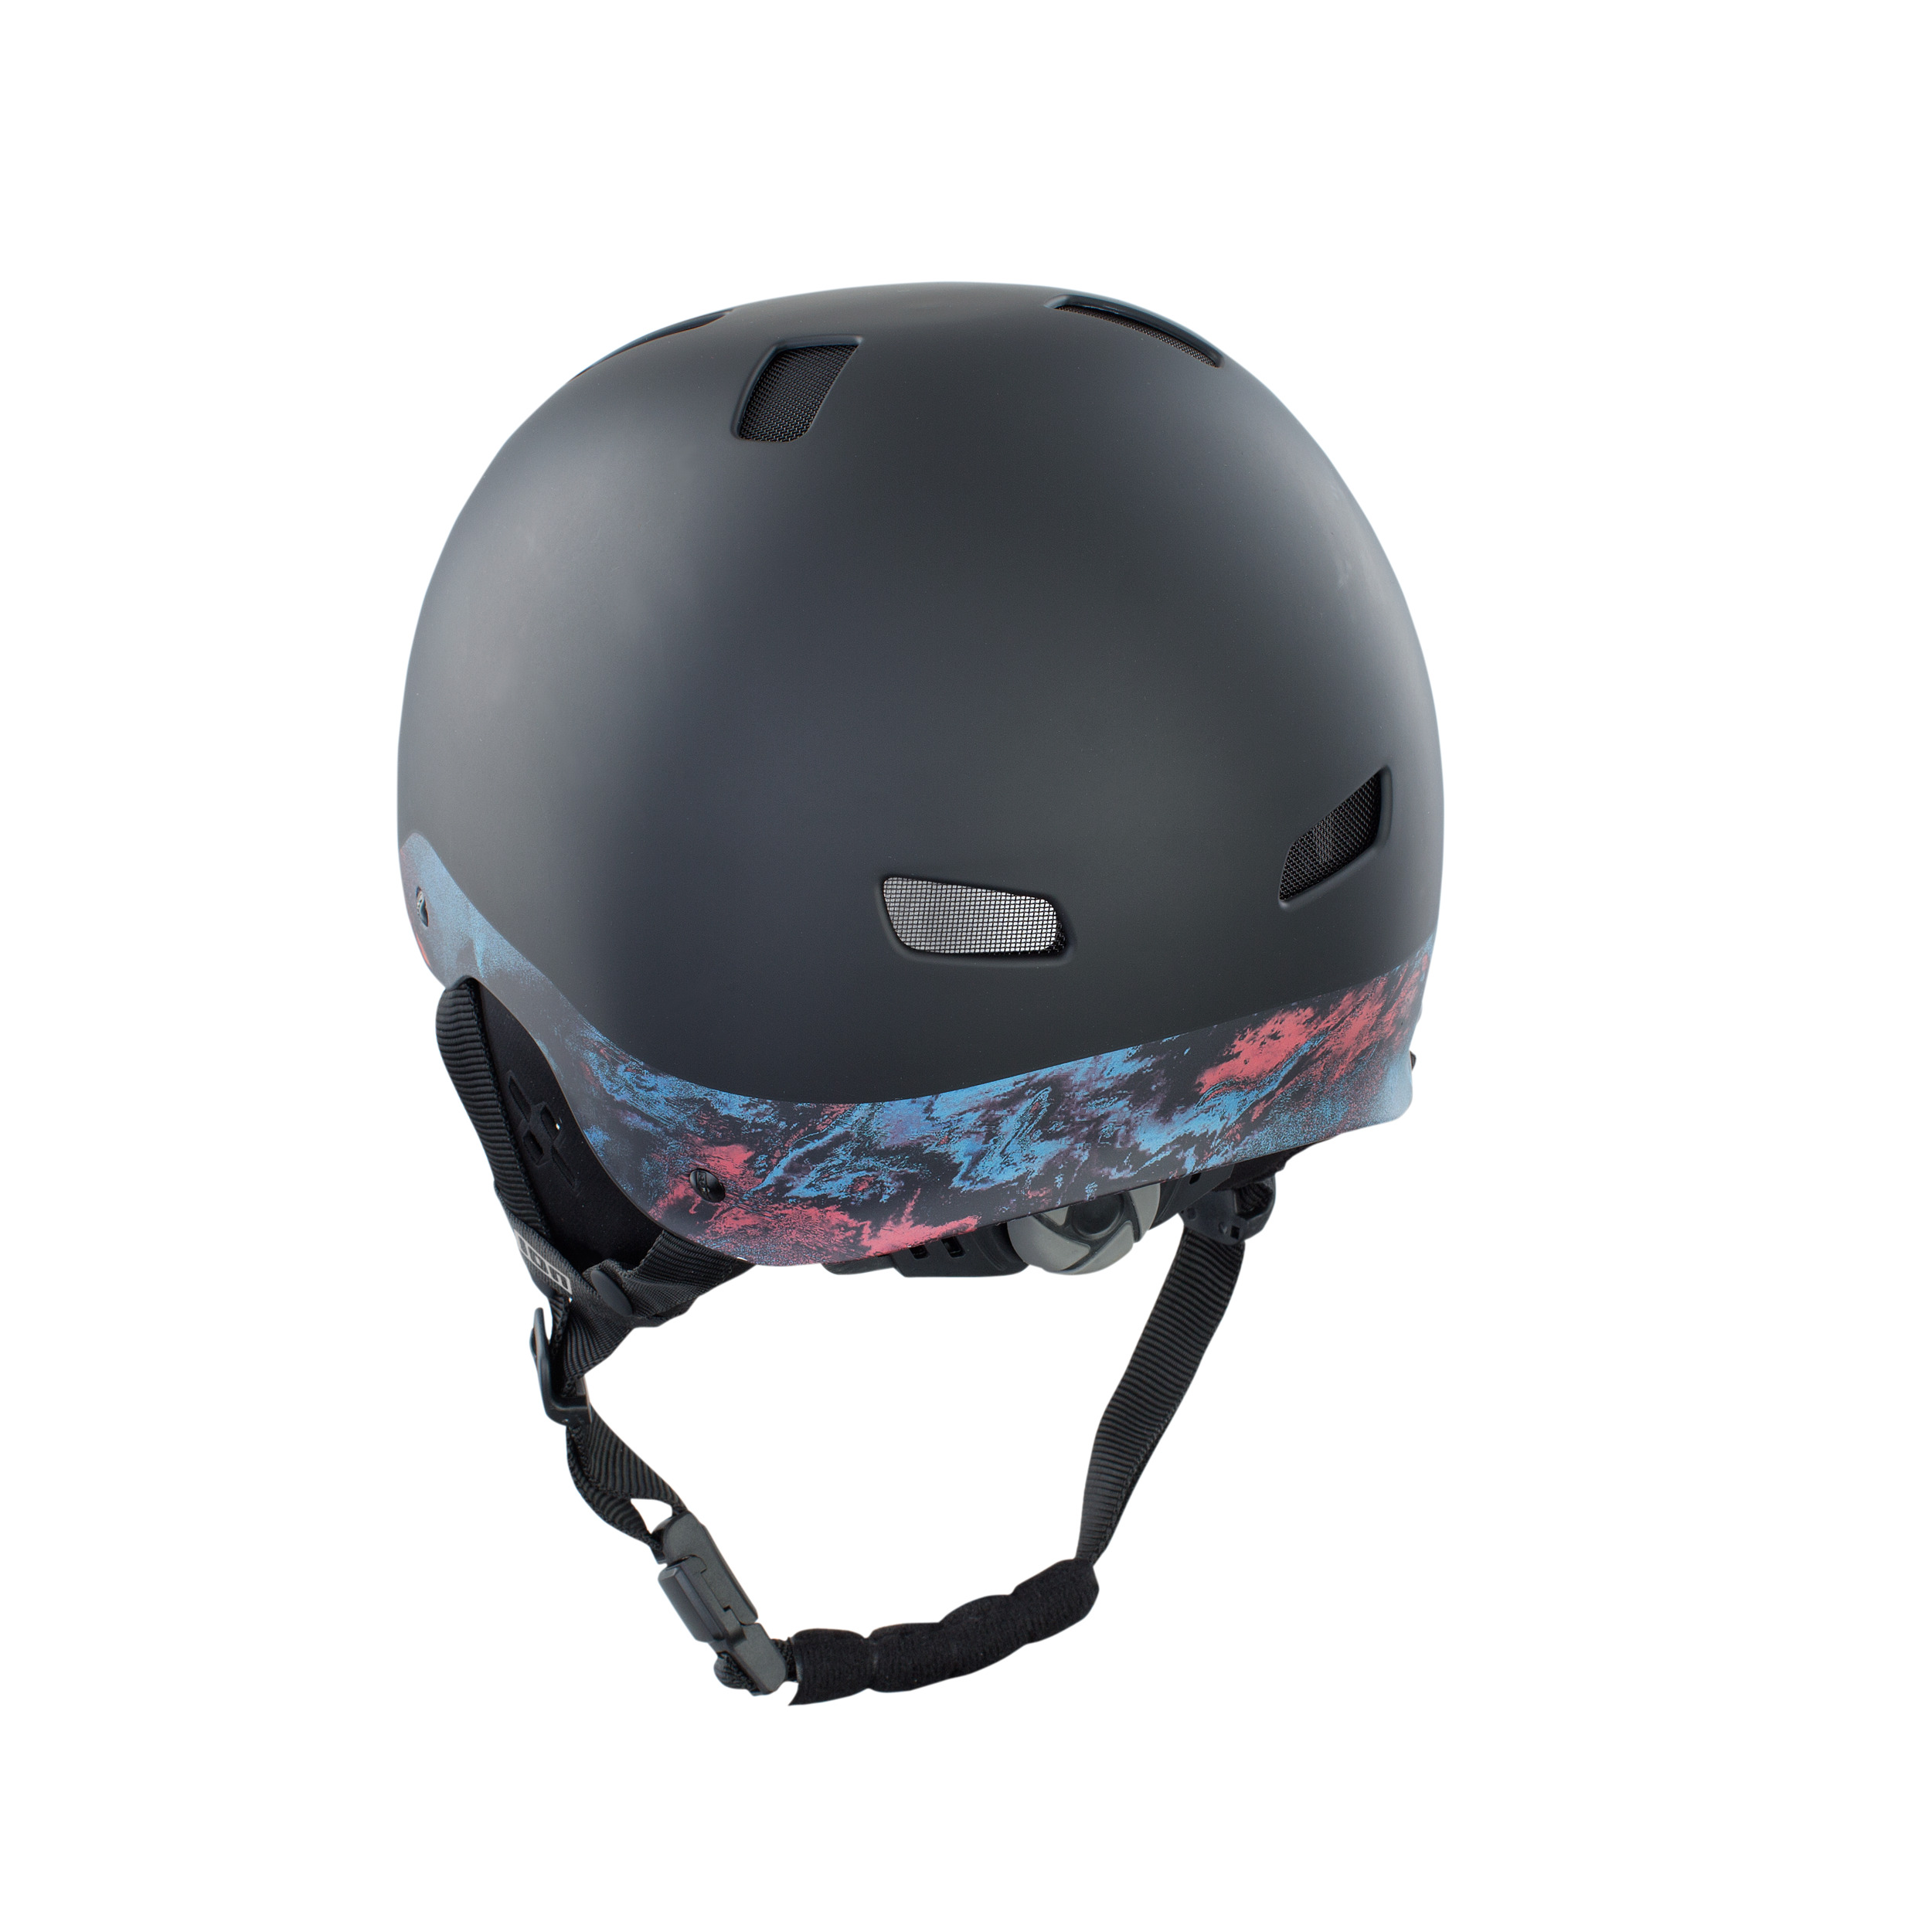 ION Wakeboard Helm Hardcap 3.2 select white 2020 Größe XL-XXL 